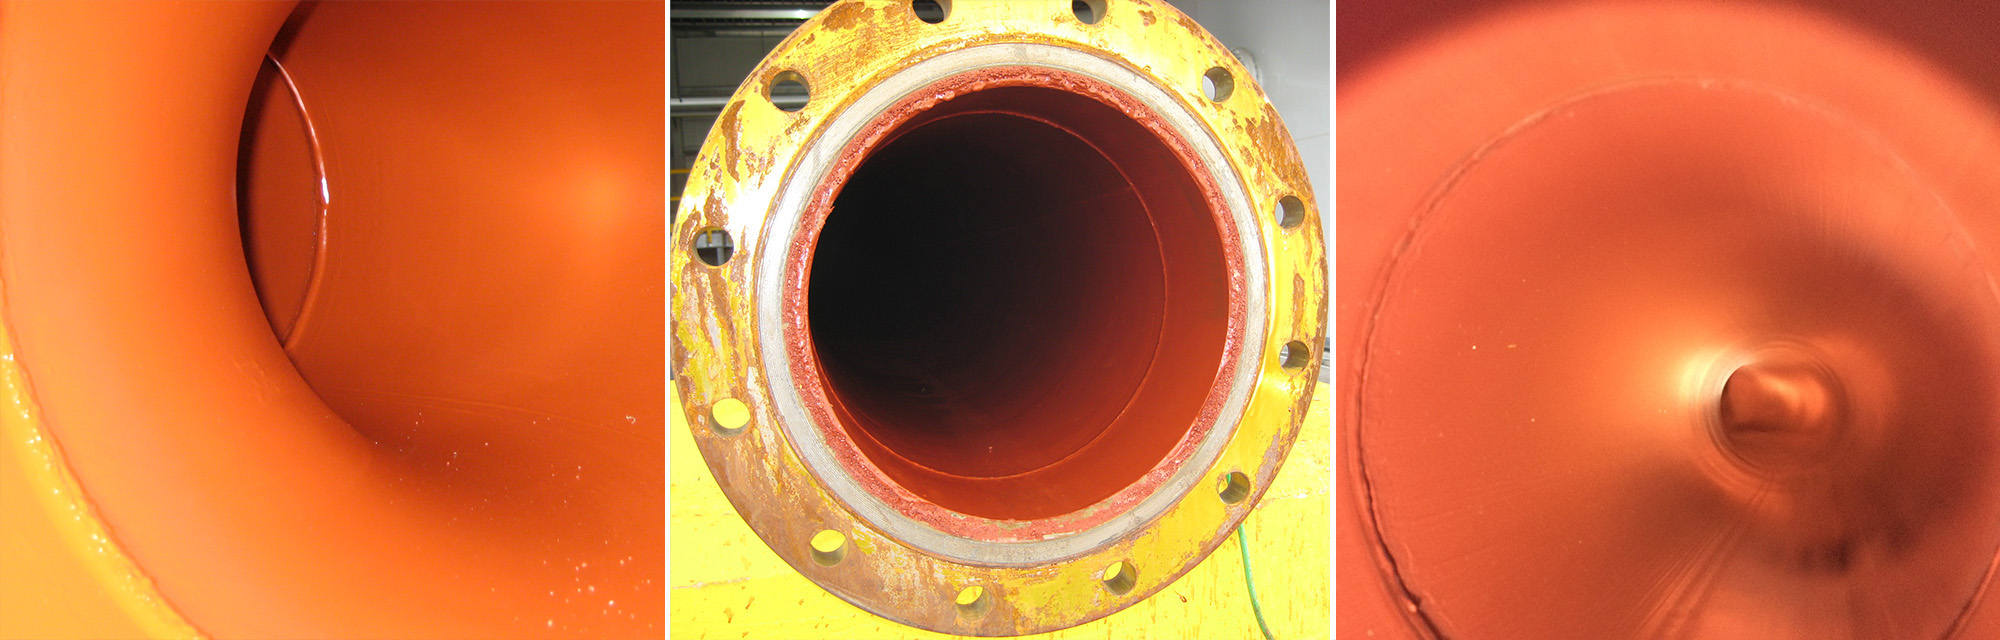 enerclear insitu coating on pipes